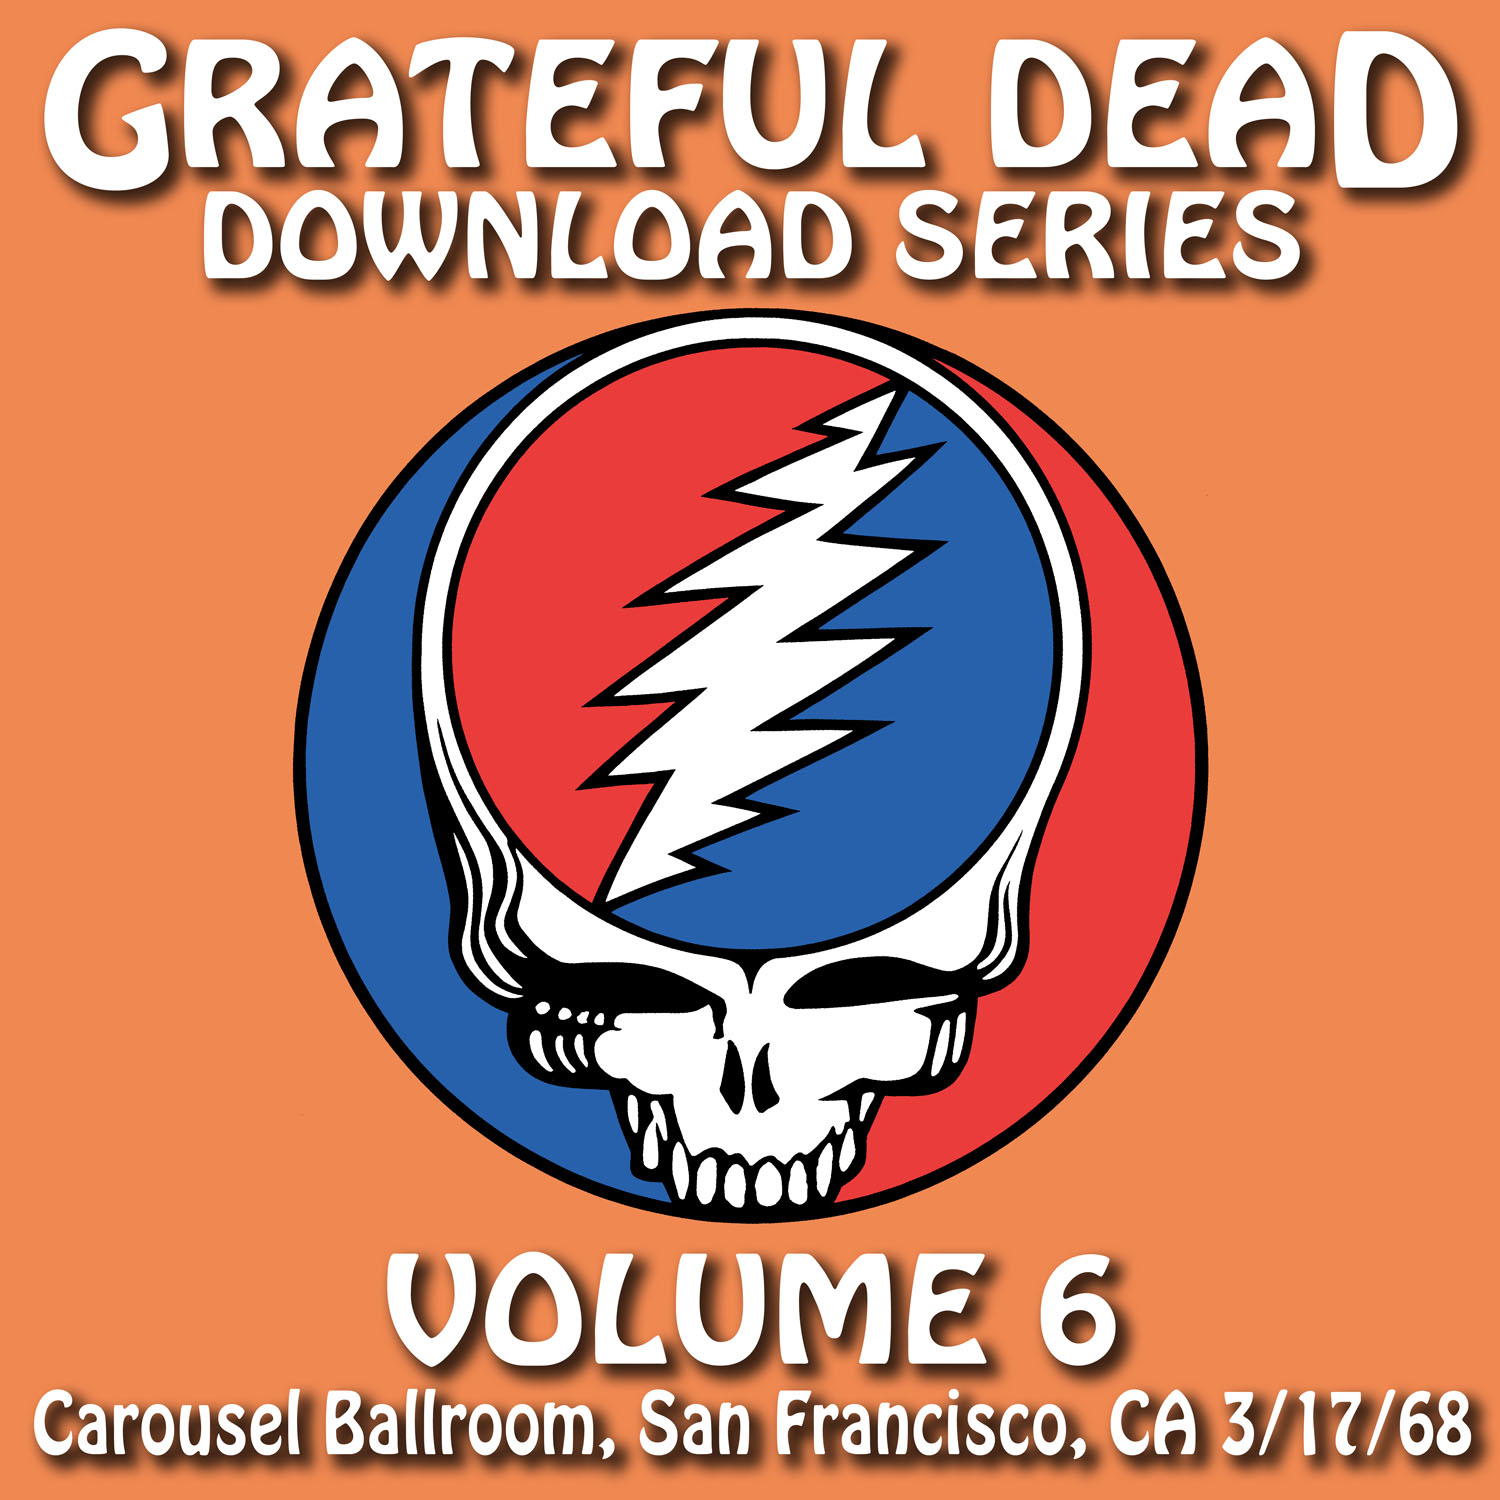 Grateful Dead Download Series 6 album cover artwork